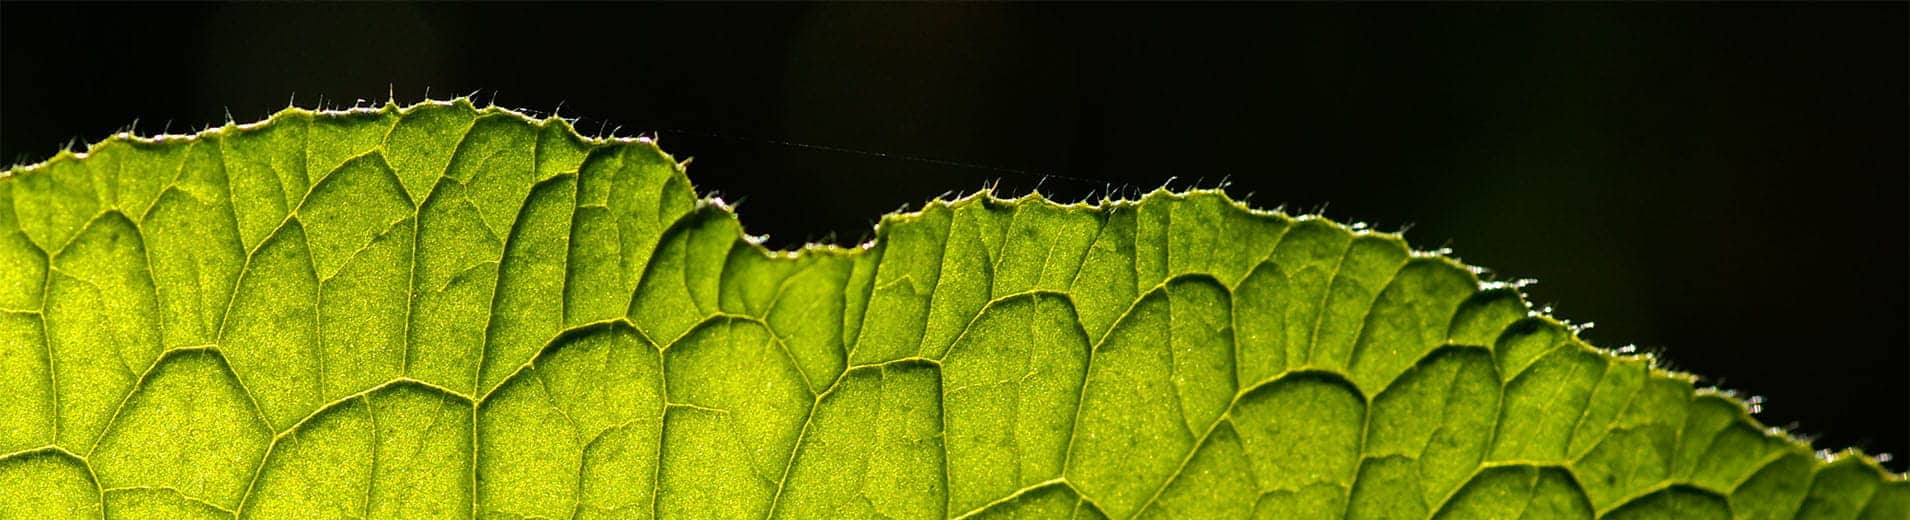 Green_leaf_closeup_S_2555